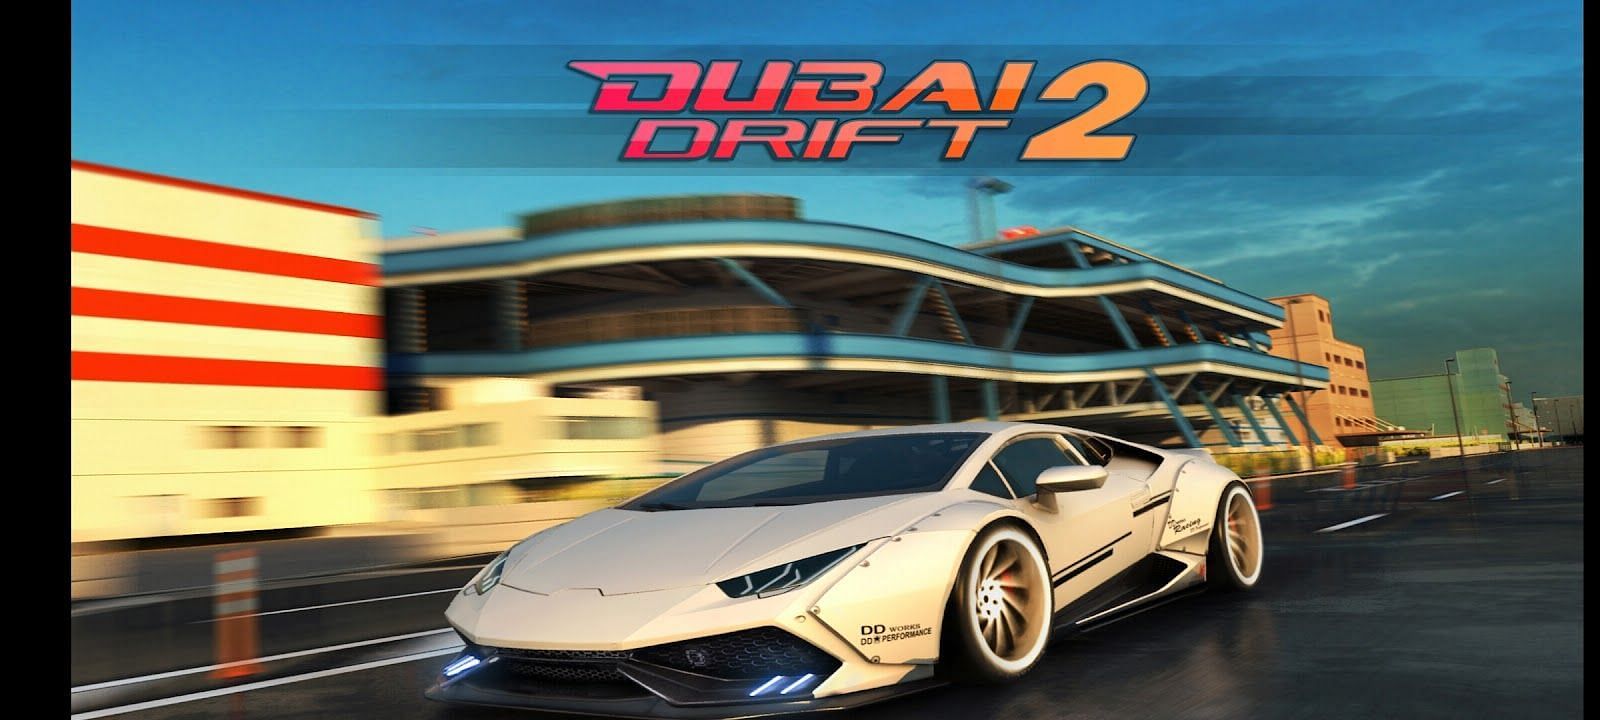 Dubai Drift 2 (Image via Zero Four LLC)